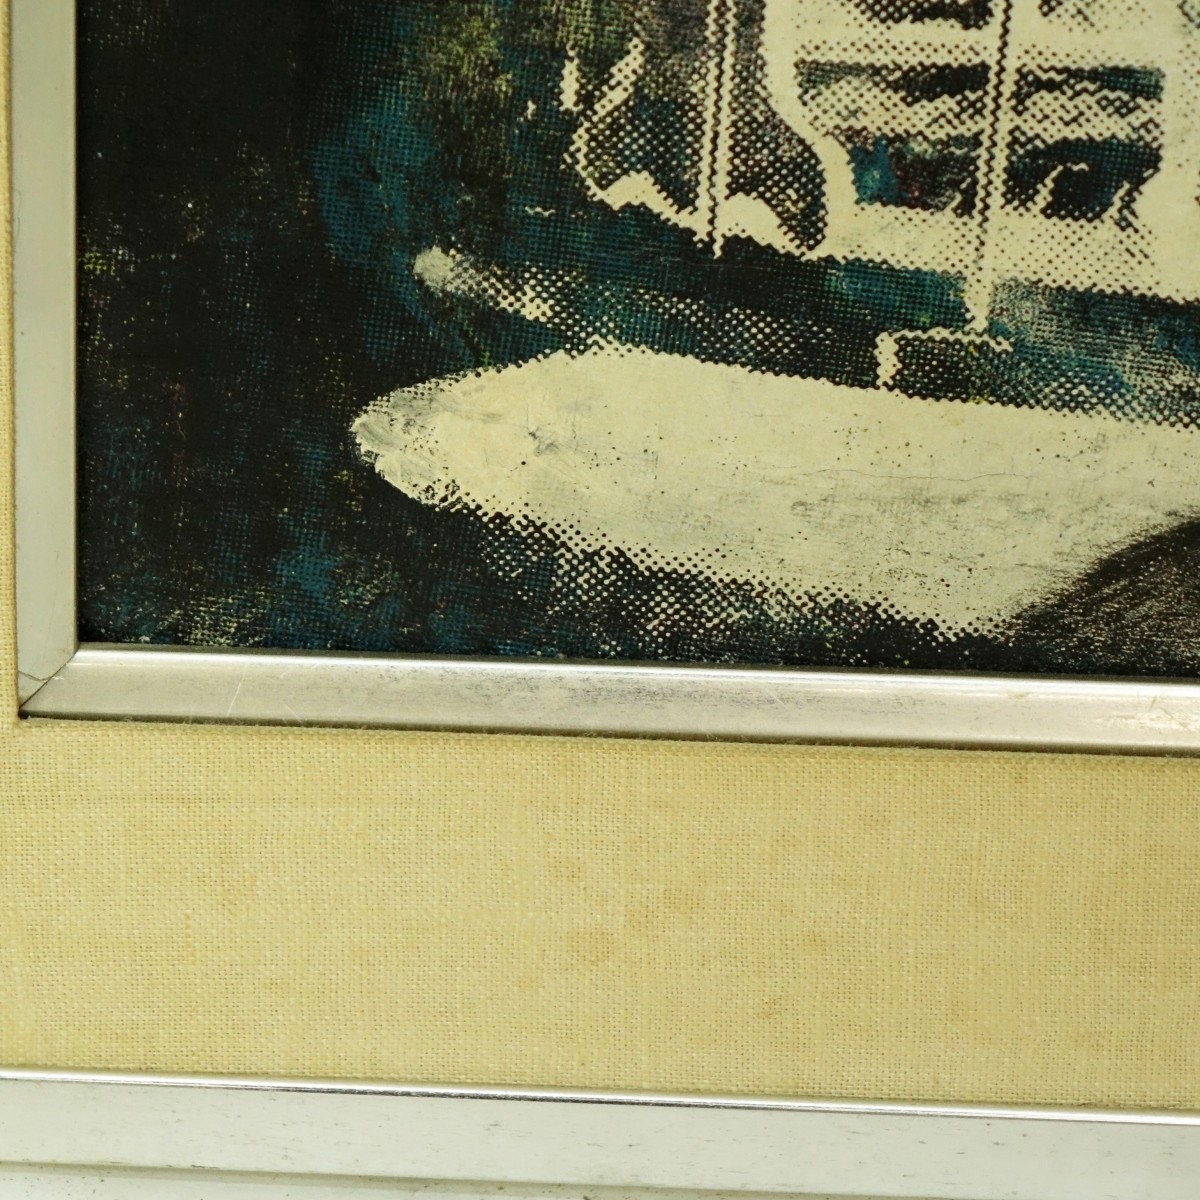 Mil Lubroth Oil on Canvas